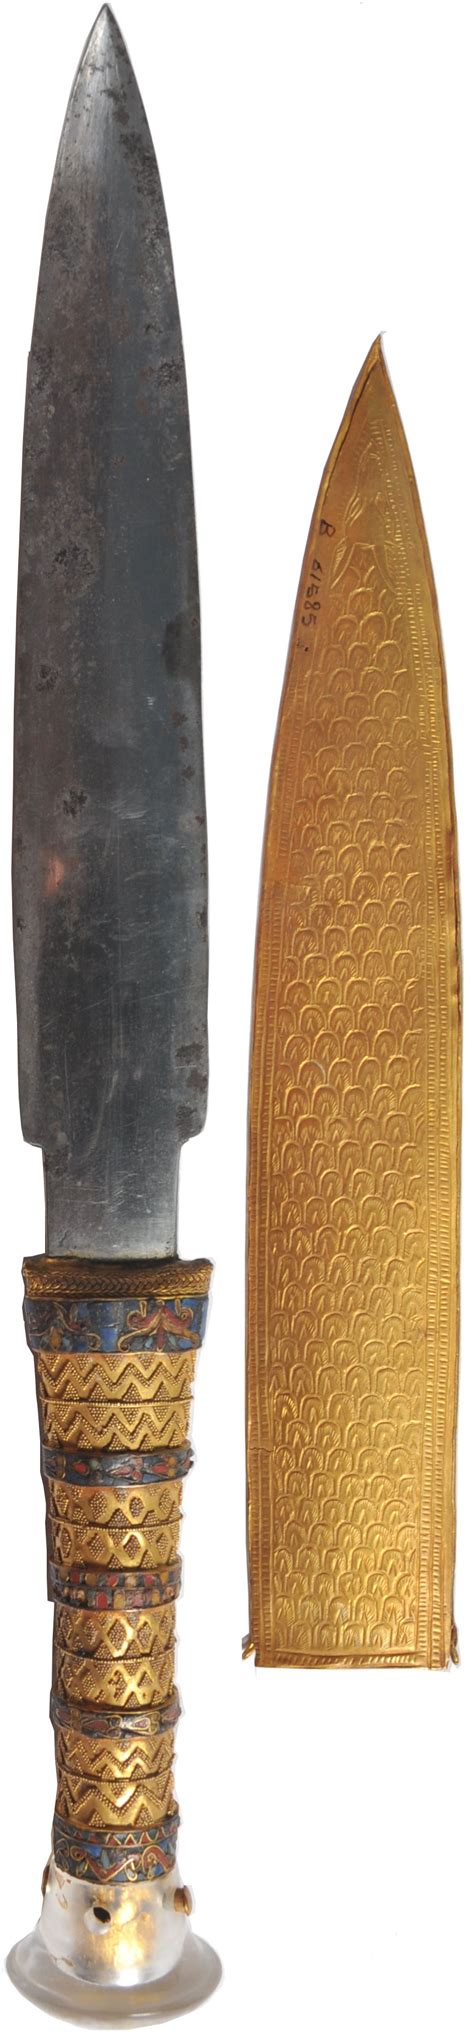 king tut s dagger was made of meteorite iron